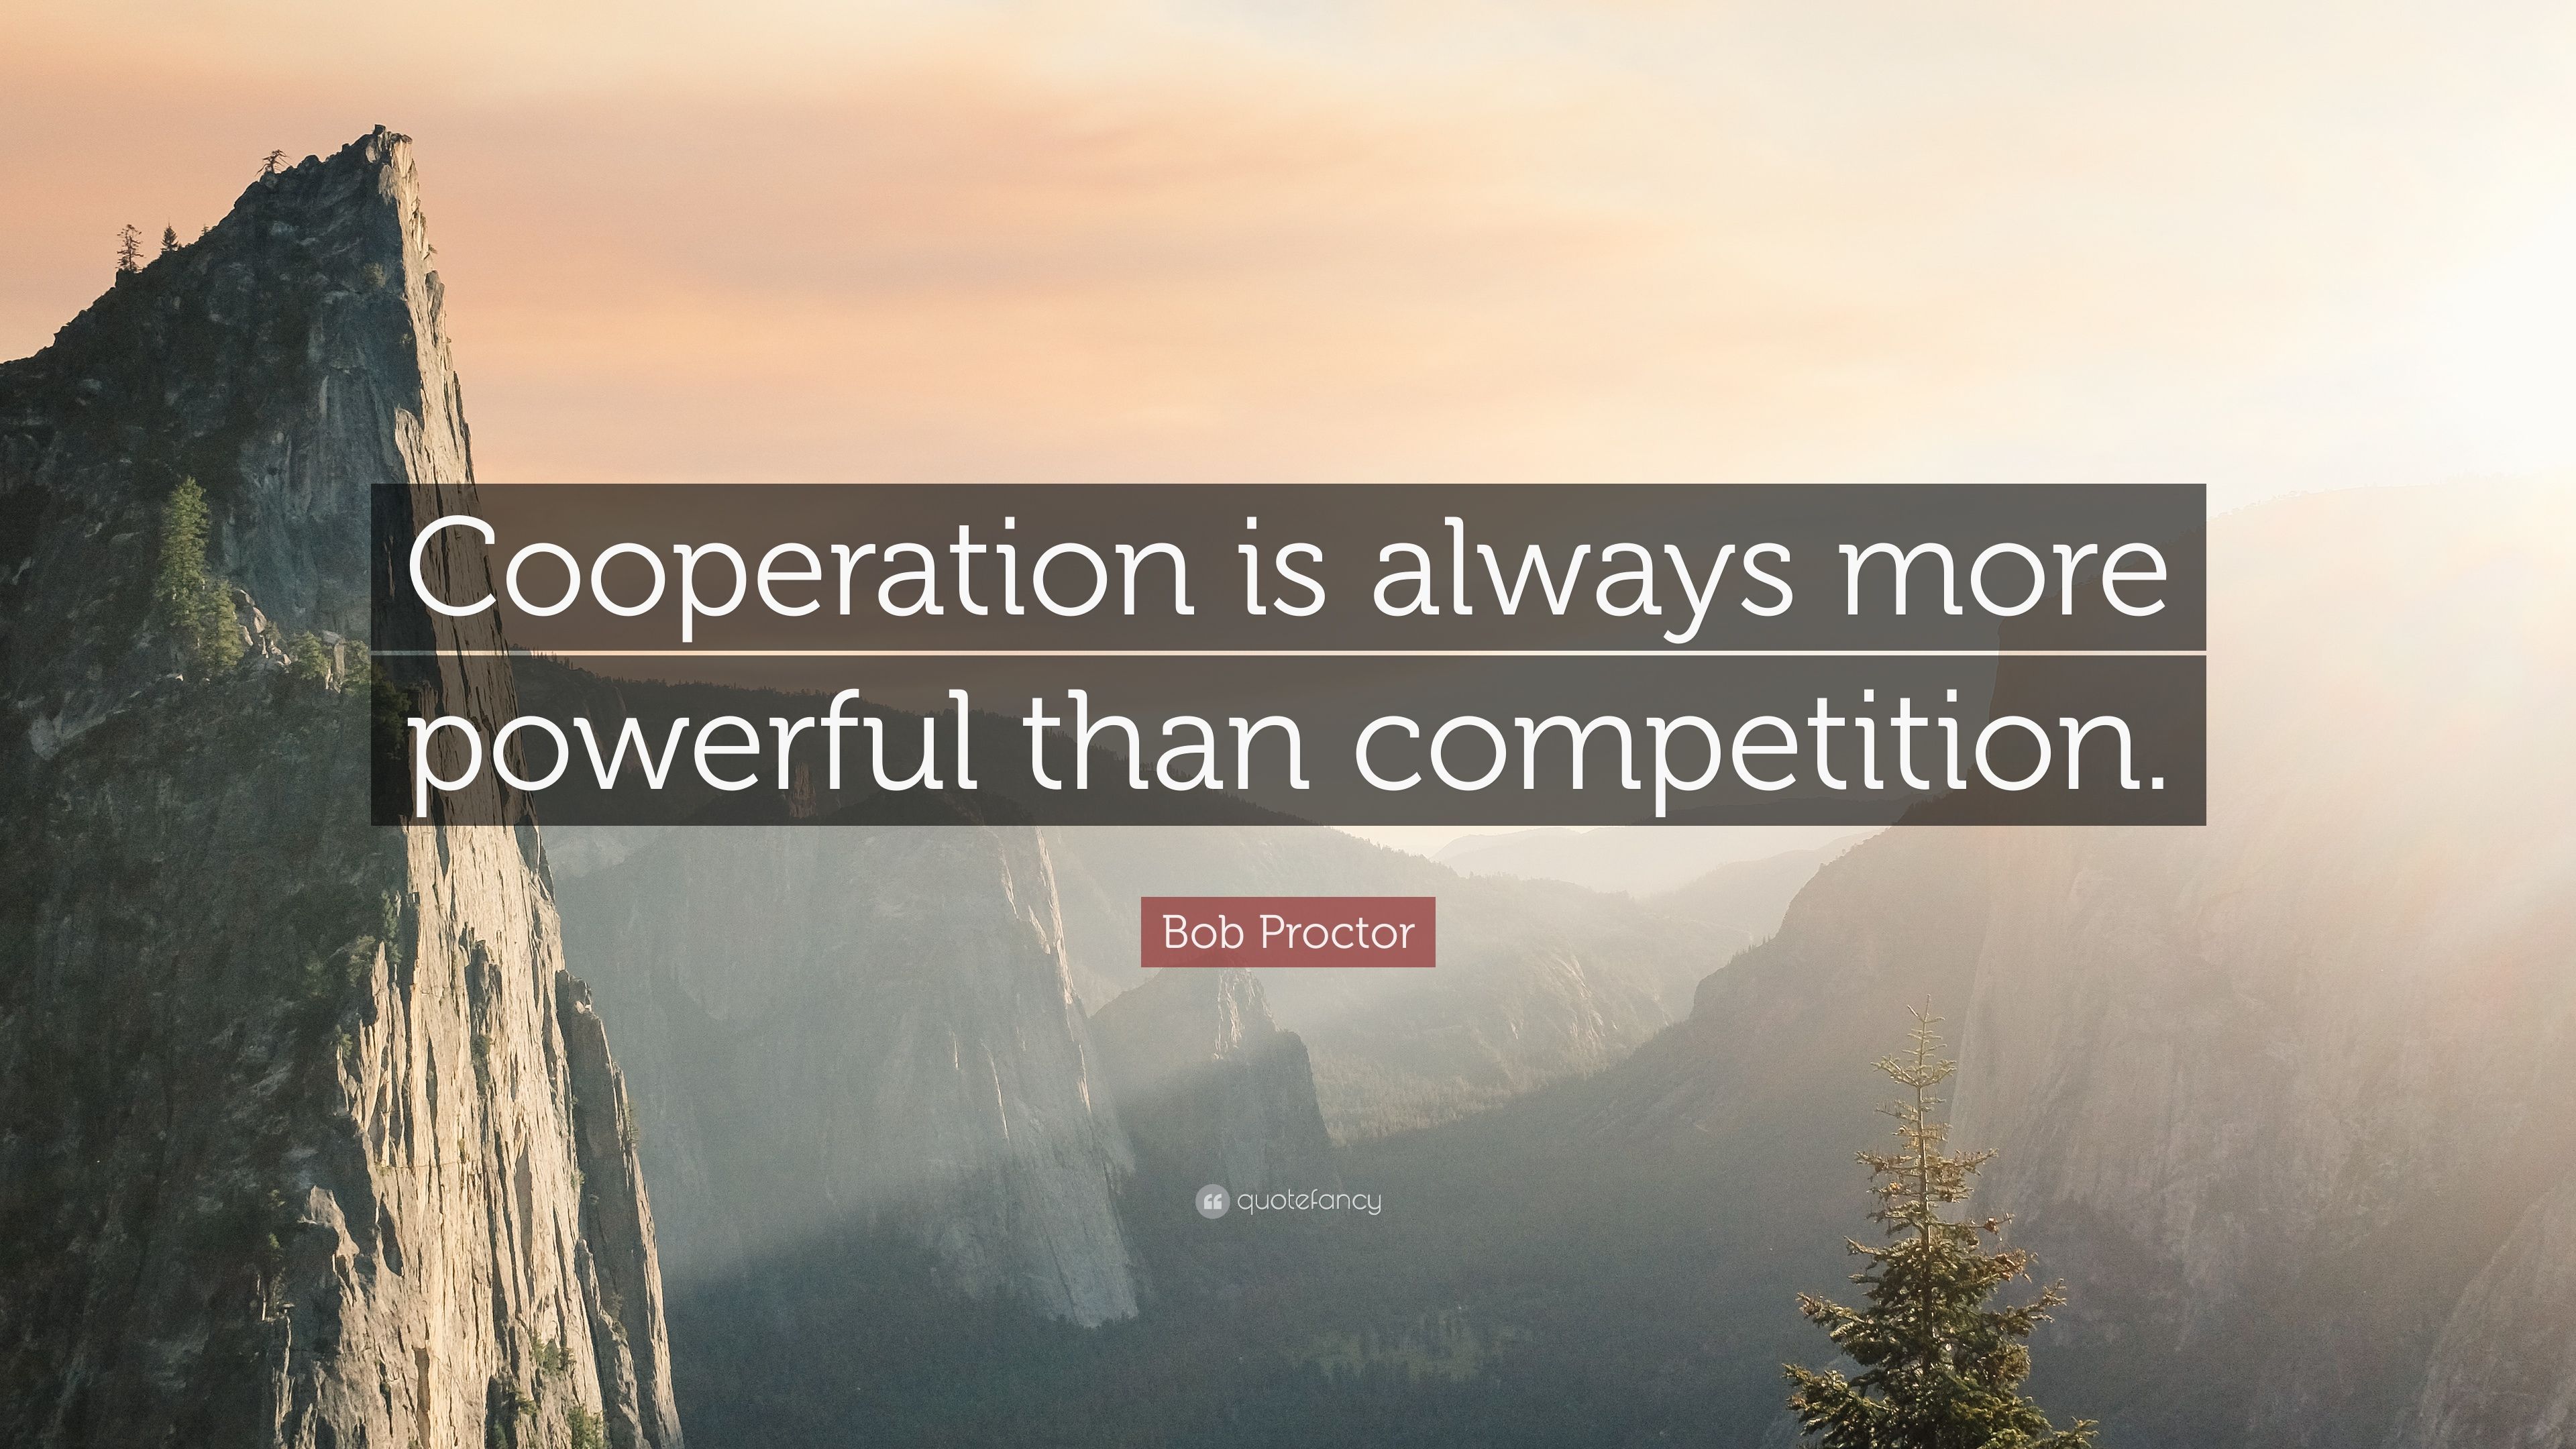 Bob Proctor Quote: “Cooperation is .quotefancy.com